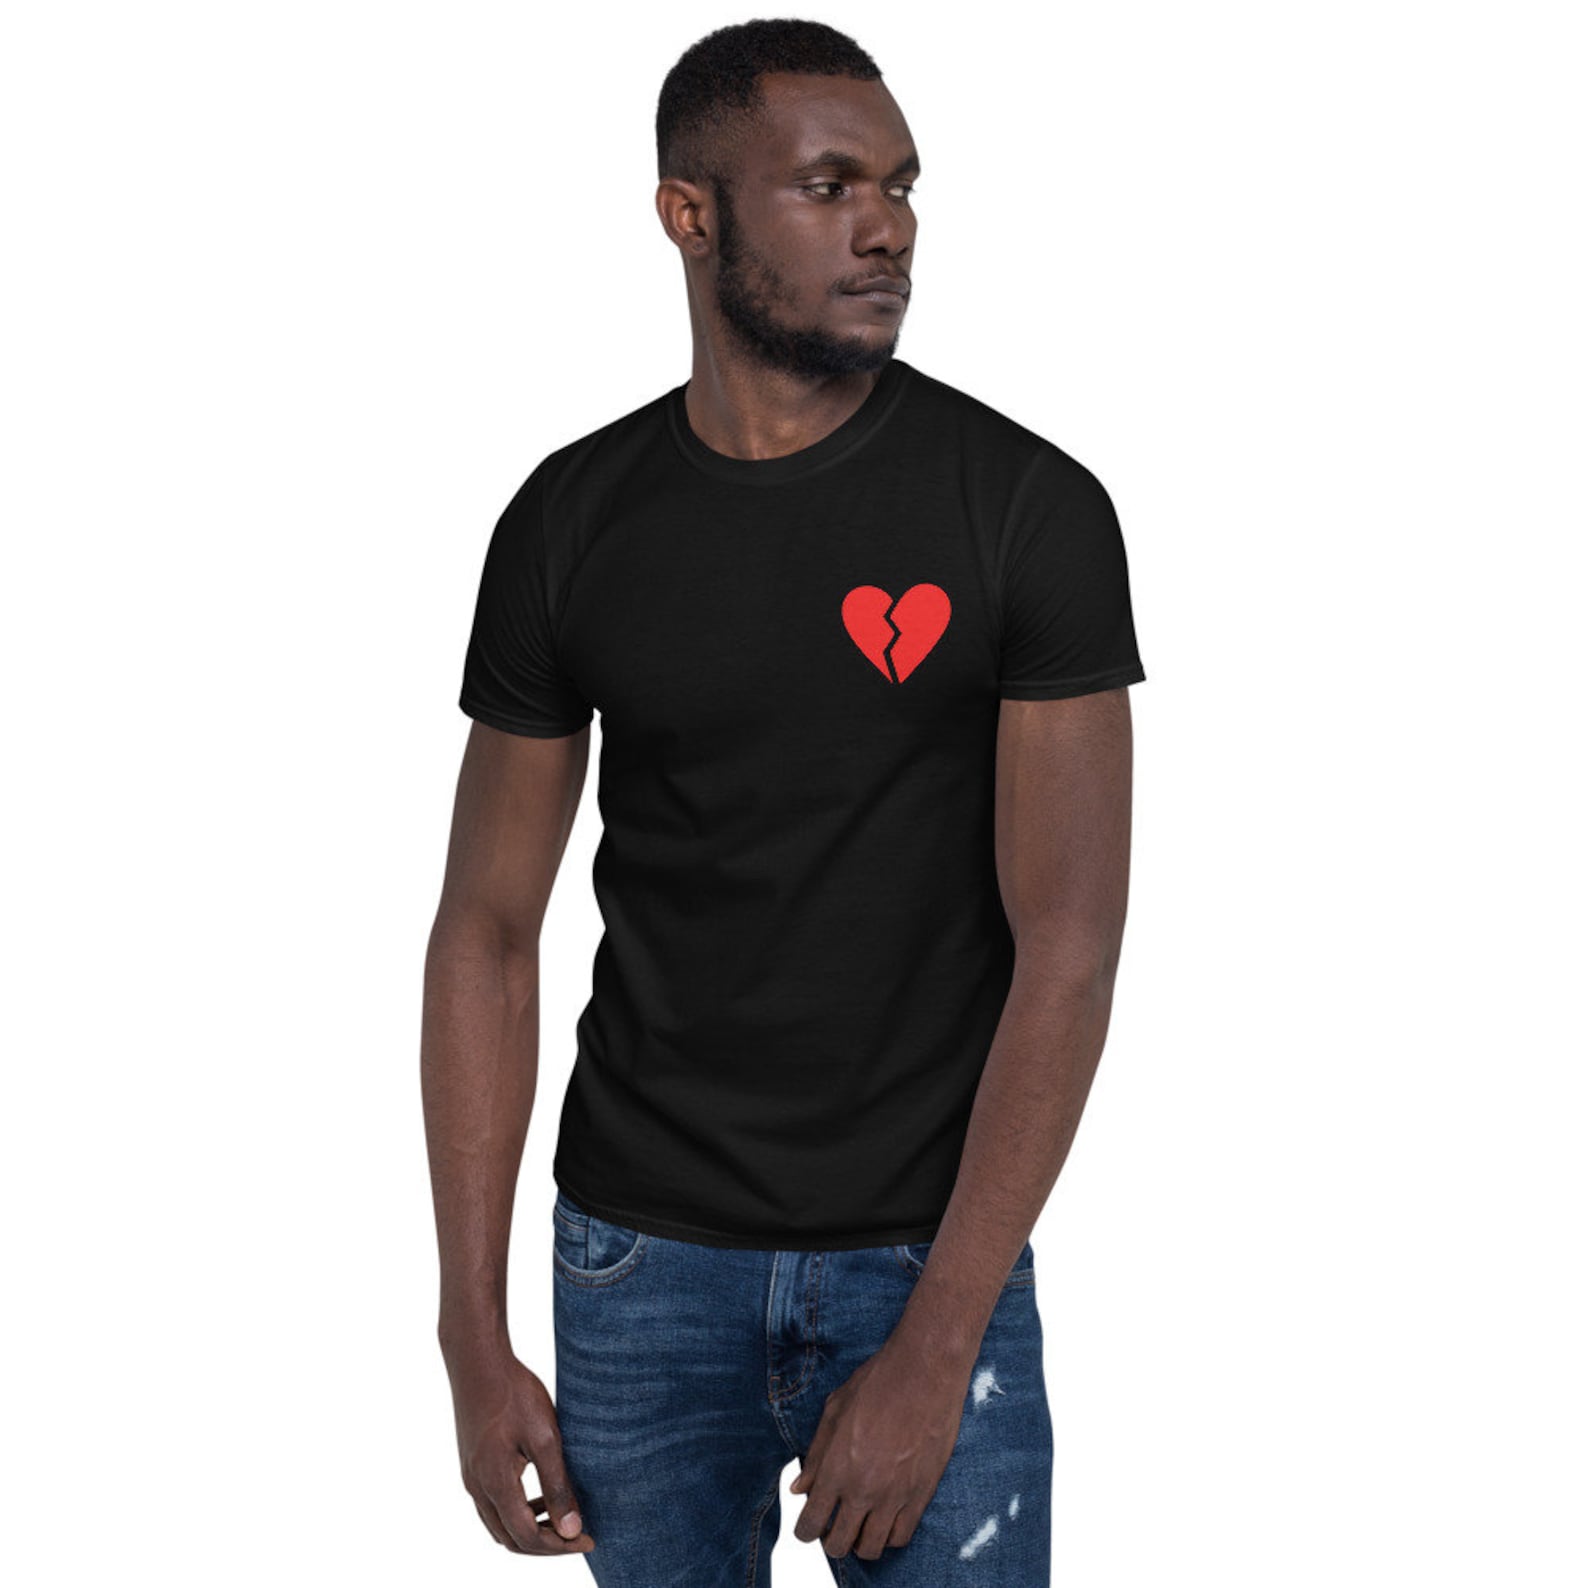 Broken Heart T-shirt Unisex Shirt Relationship Shirt | Etsy